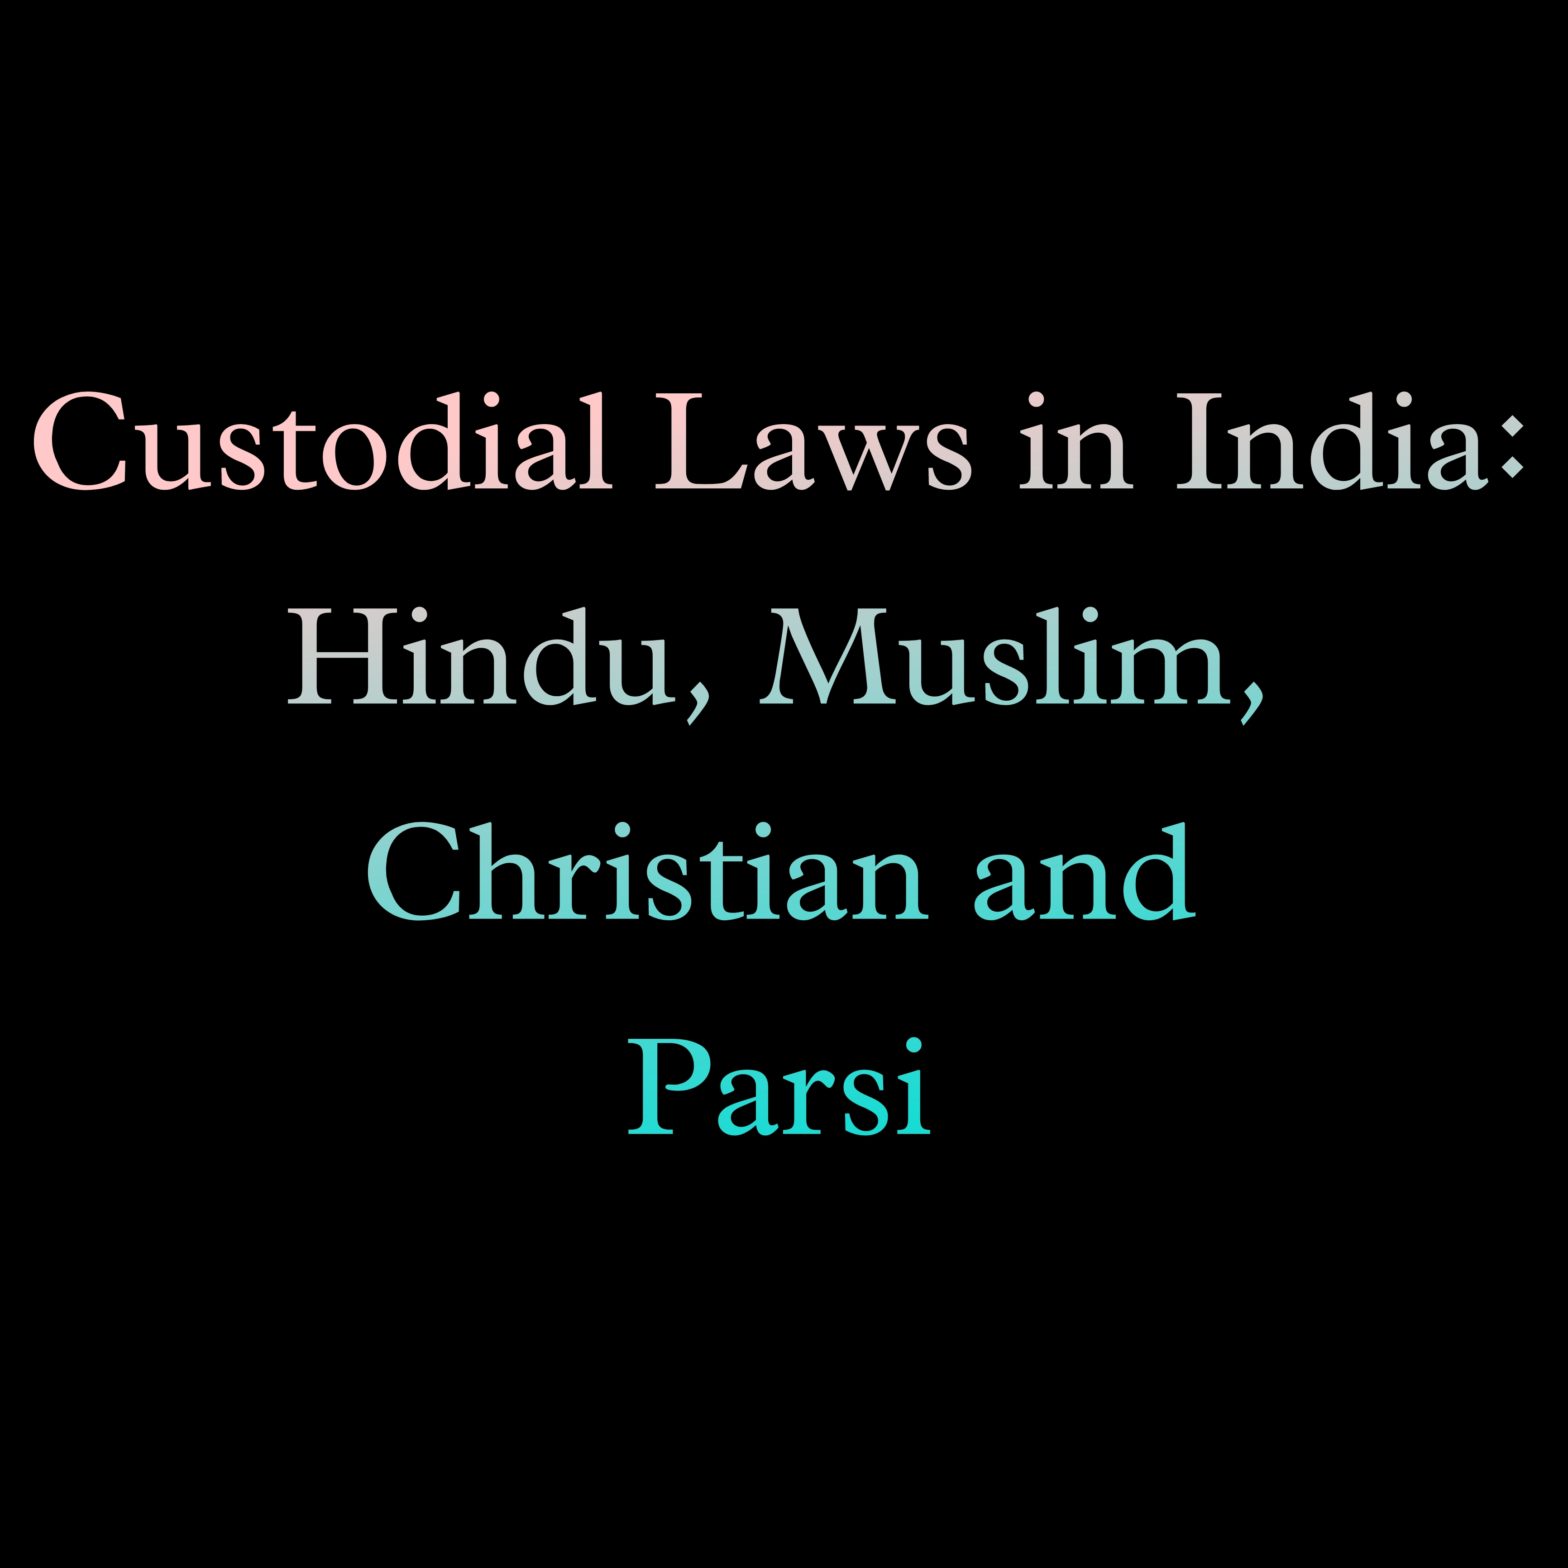 Custodial Laws in India: Hindu, Muslim, Christian and Parsi.